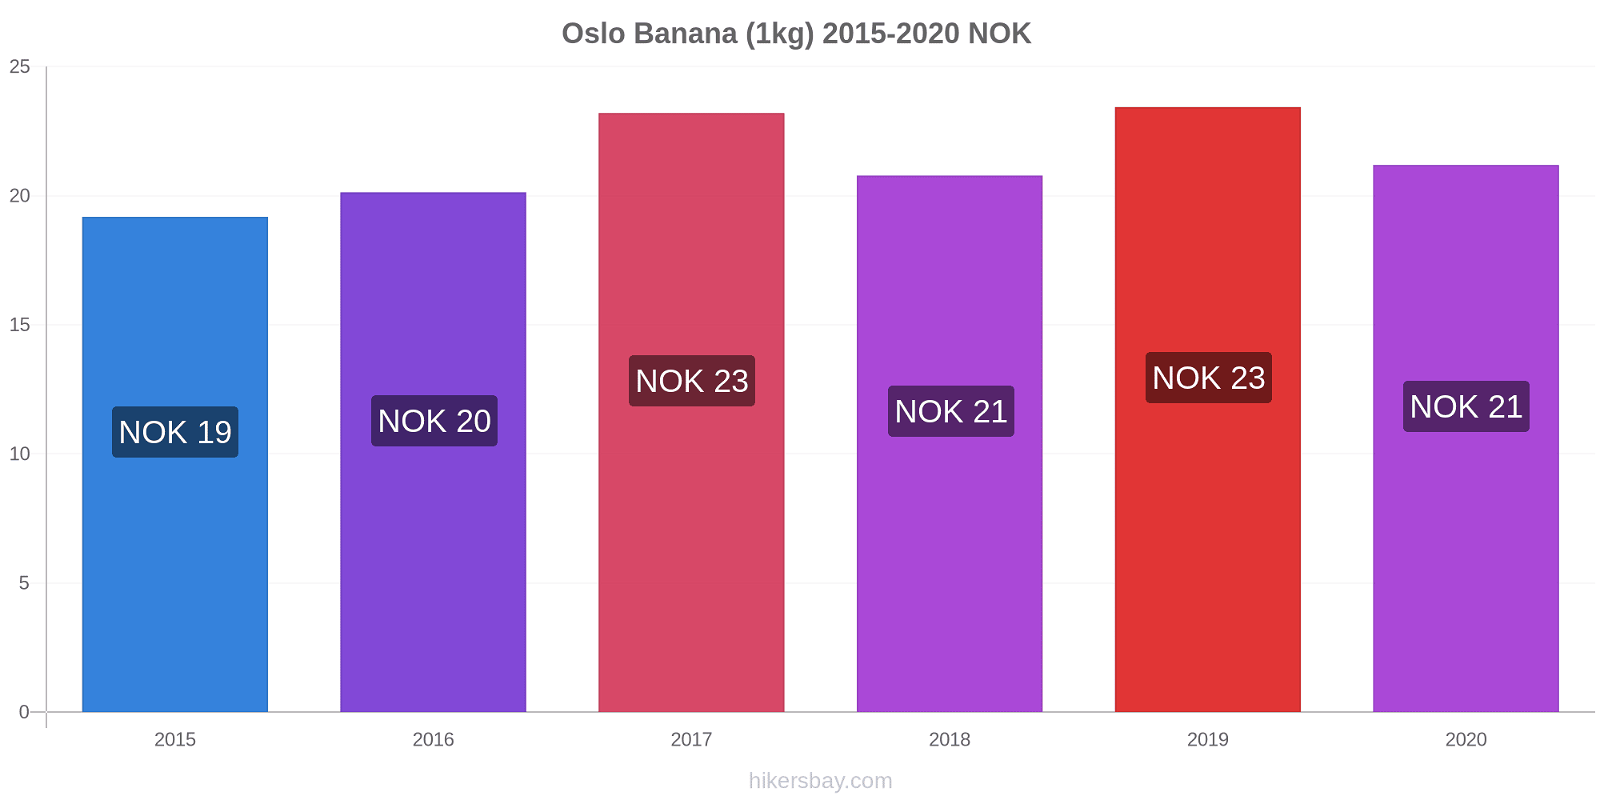 Oslo modificări de preț Banana (1kg) hikersbay.com